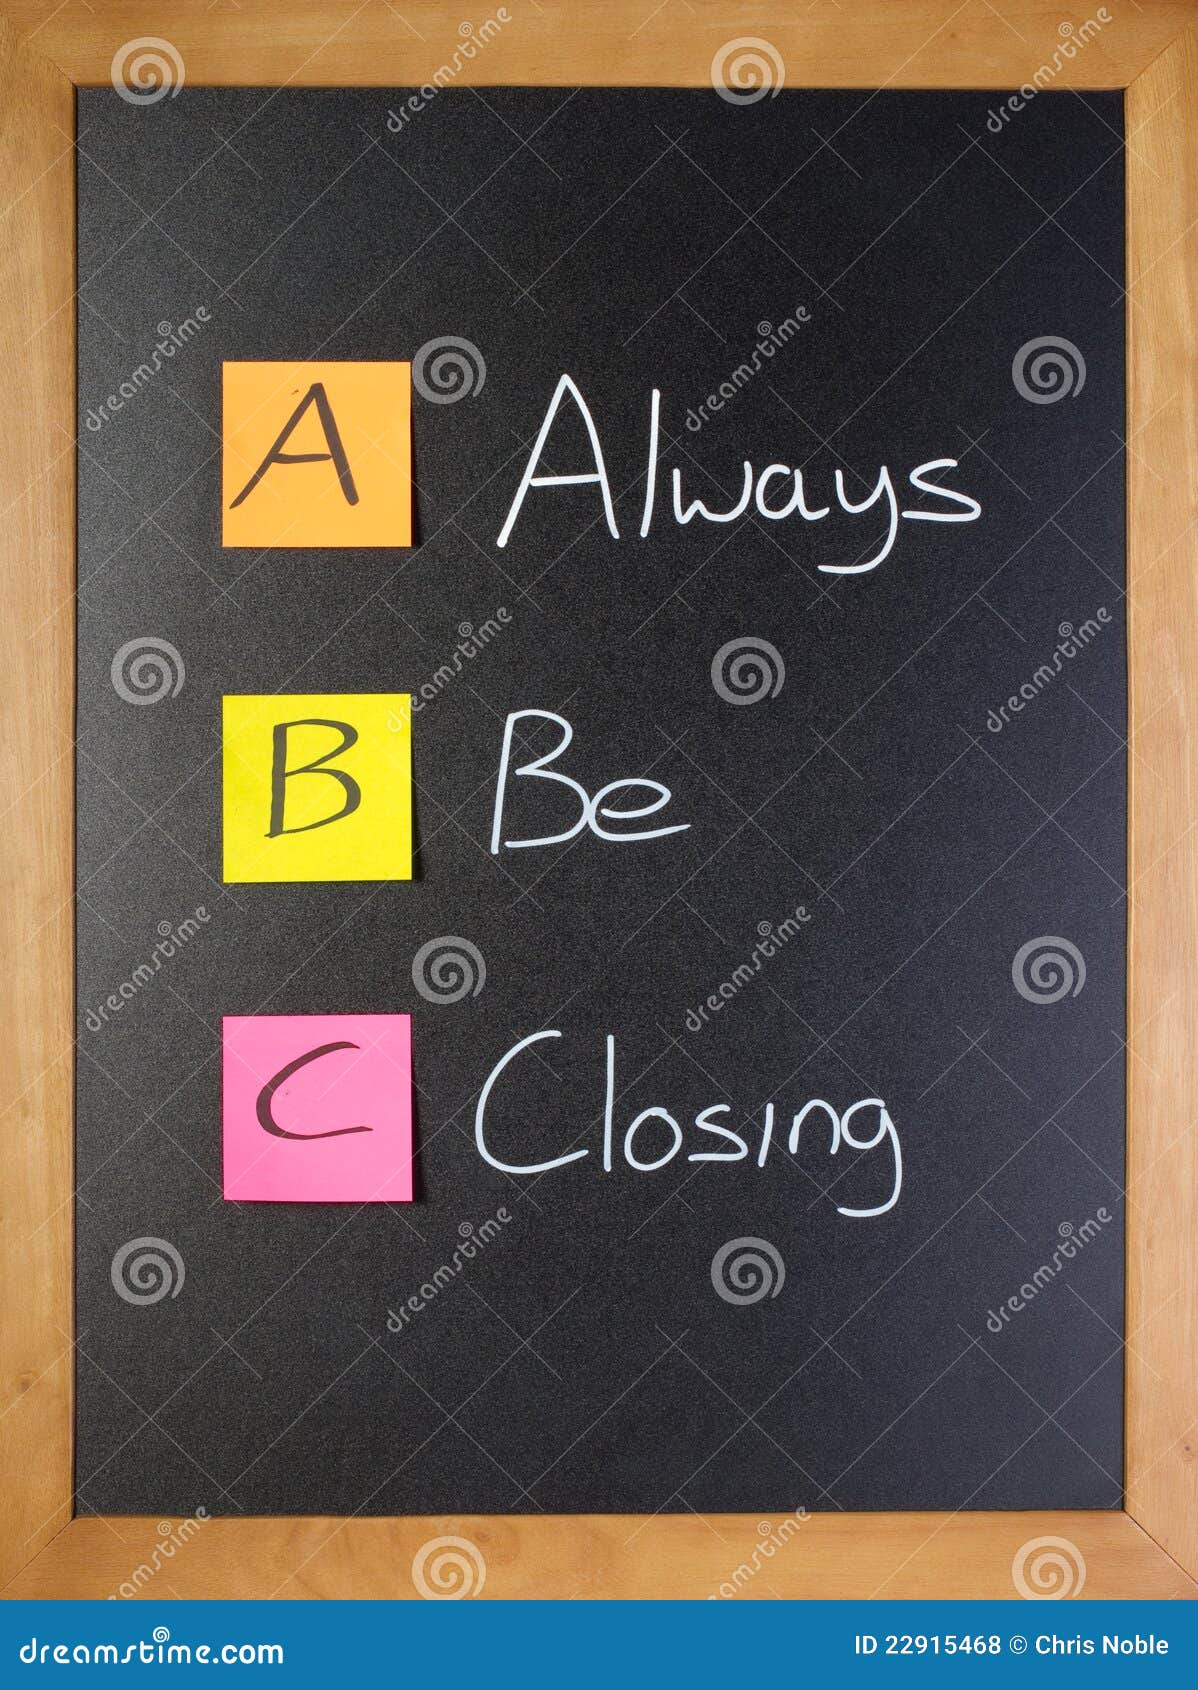 Abc Sales Training Always Be Closing Stock Photo Image Of Writing Motivational